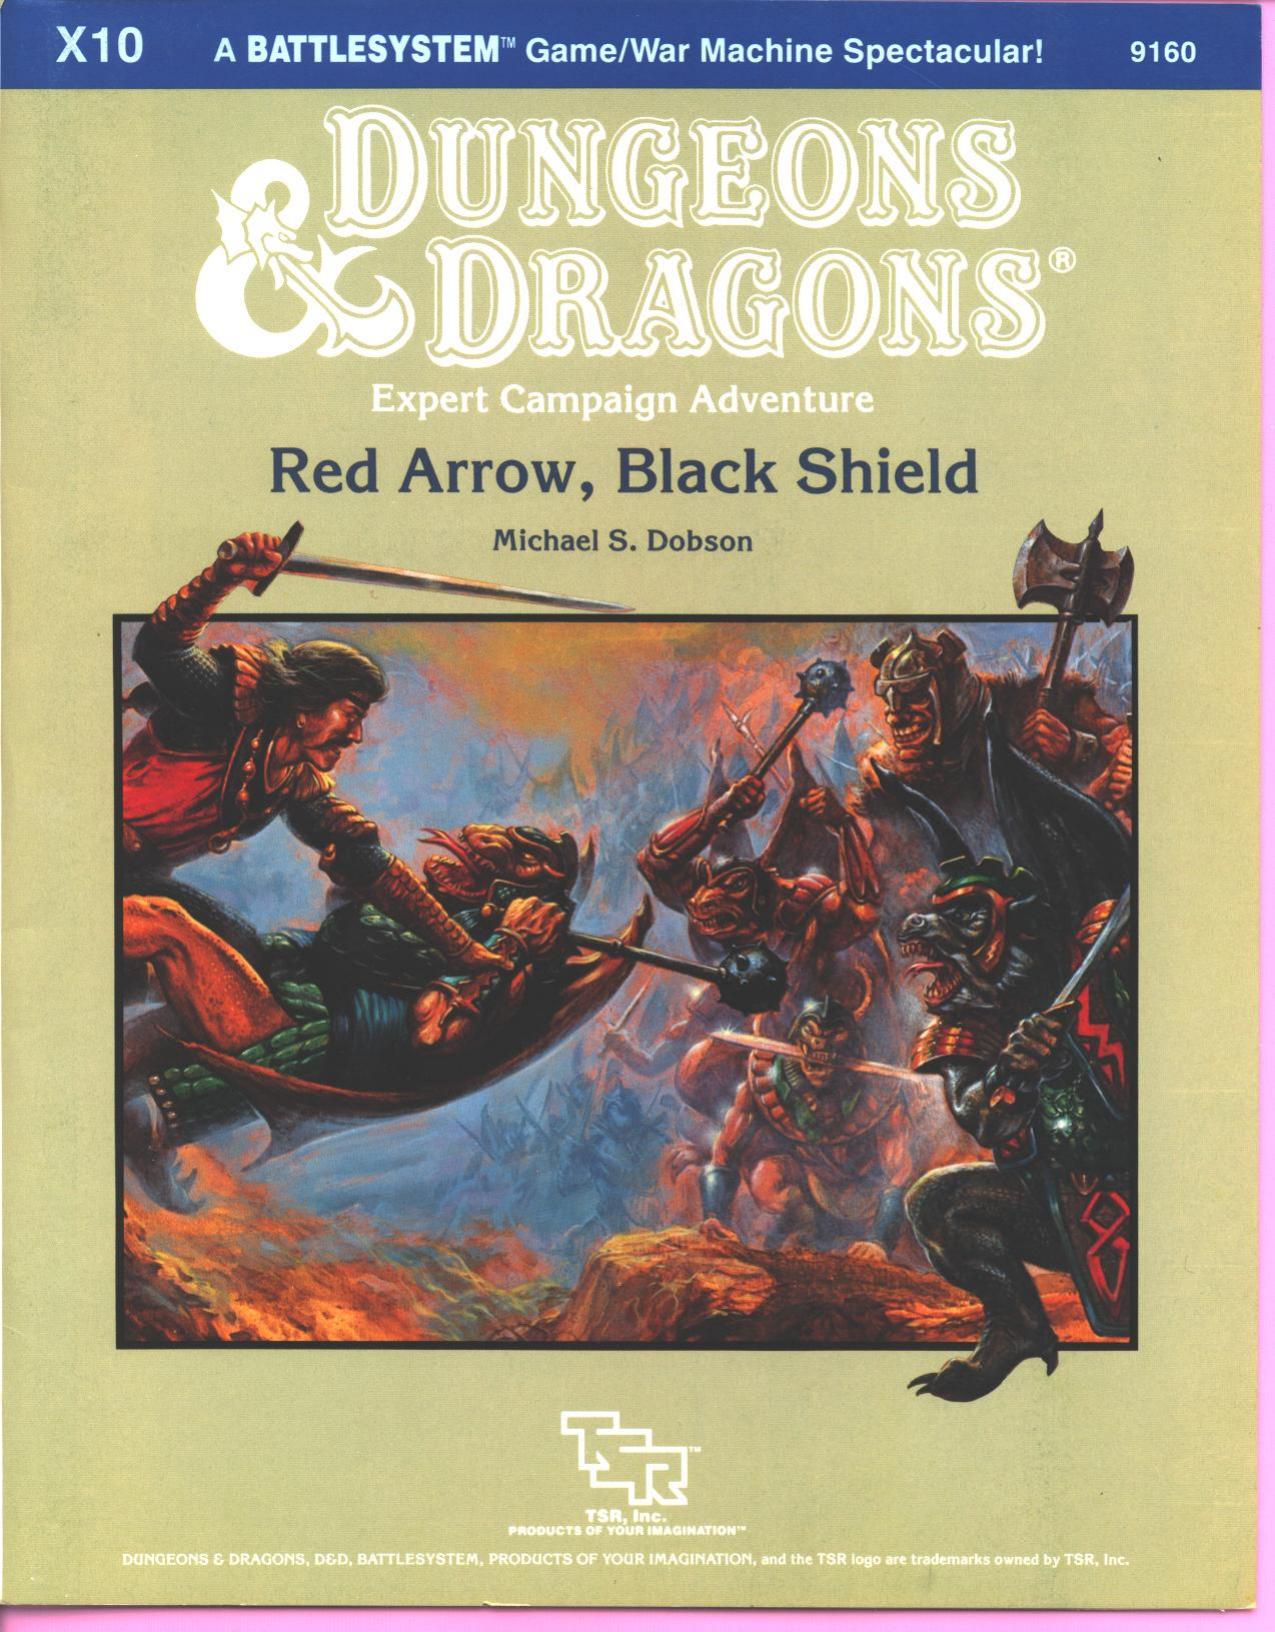 Red Arrow, Black Shield